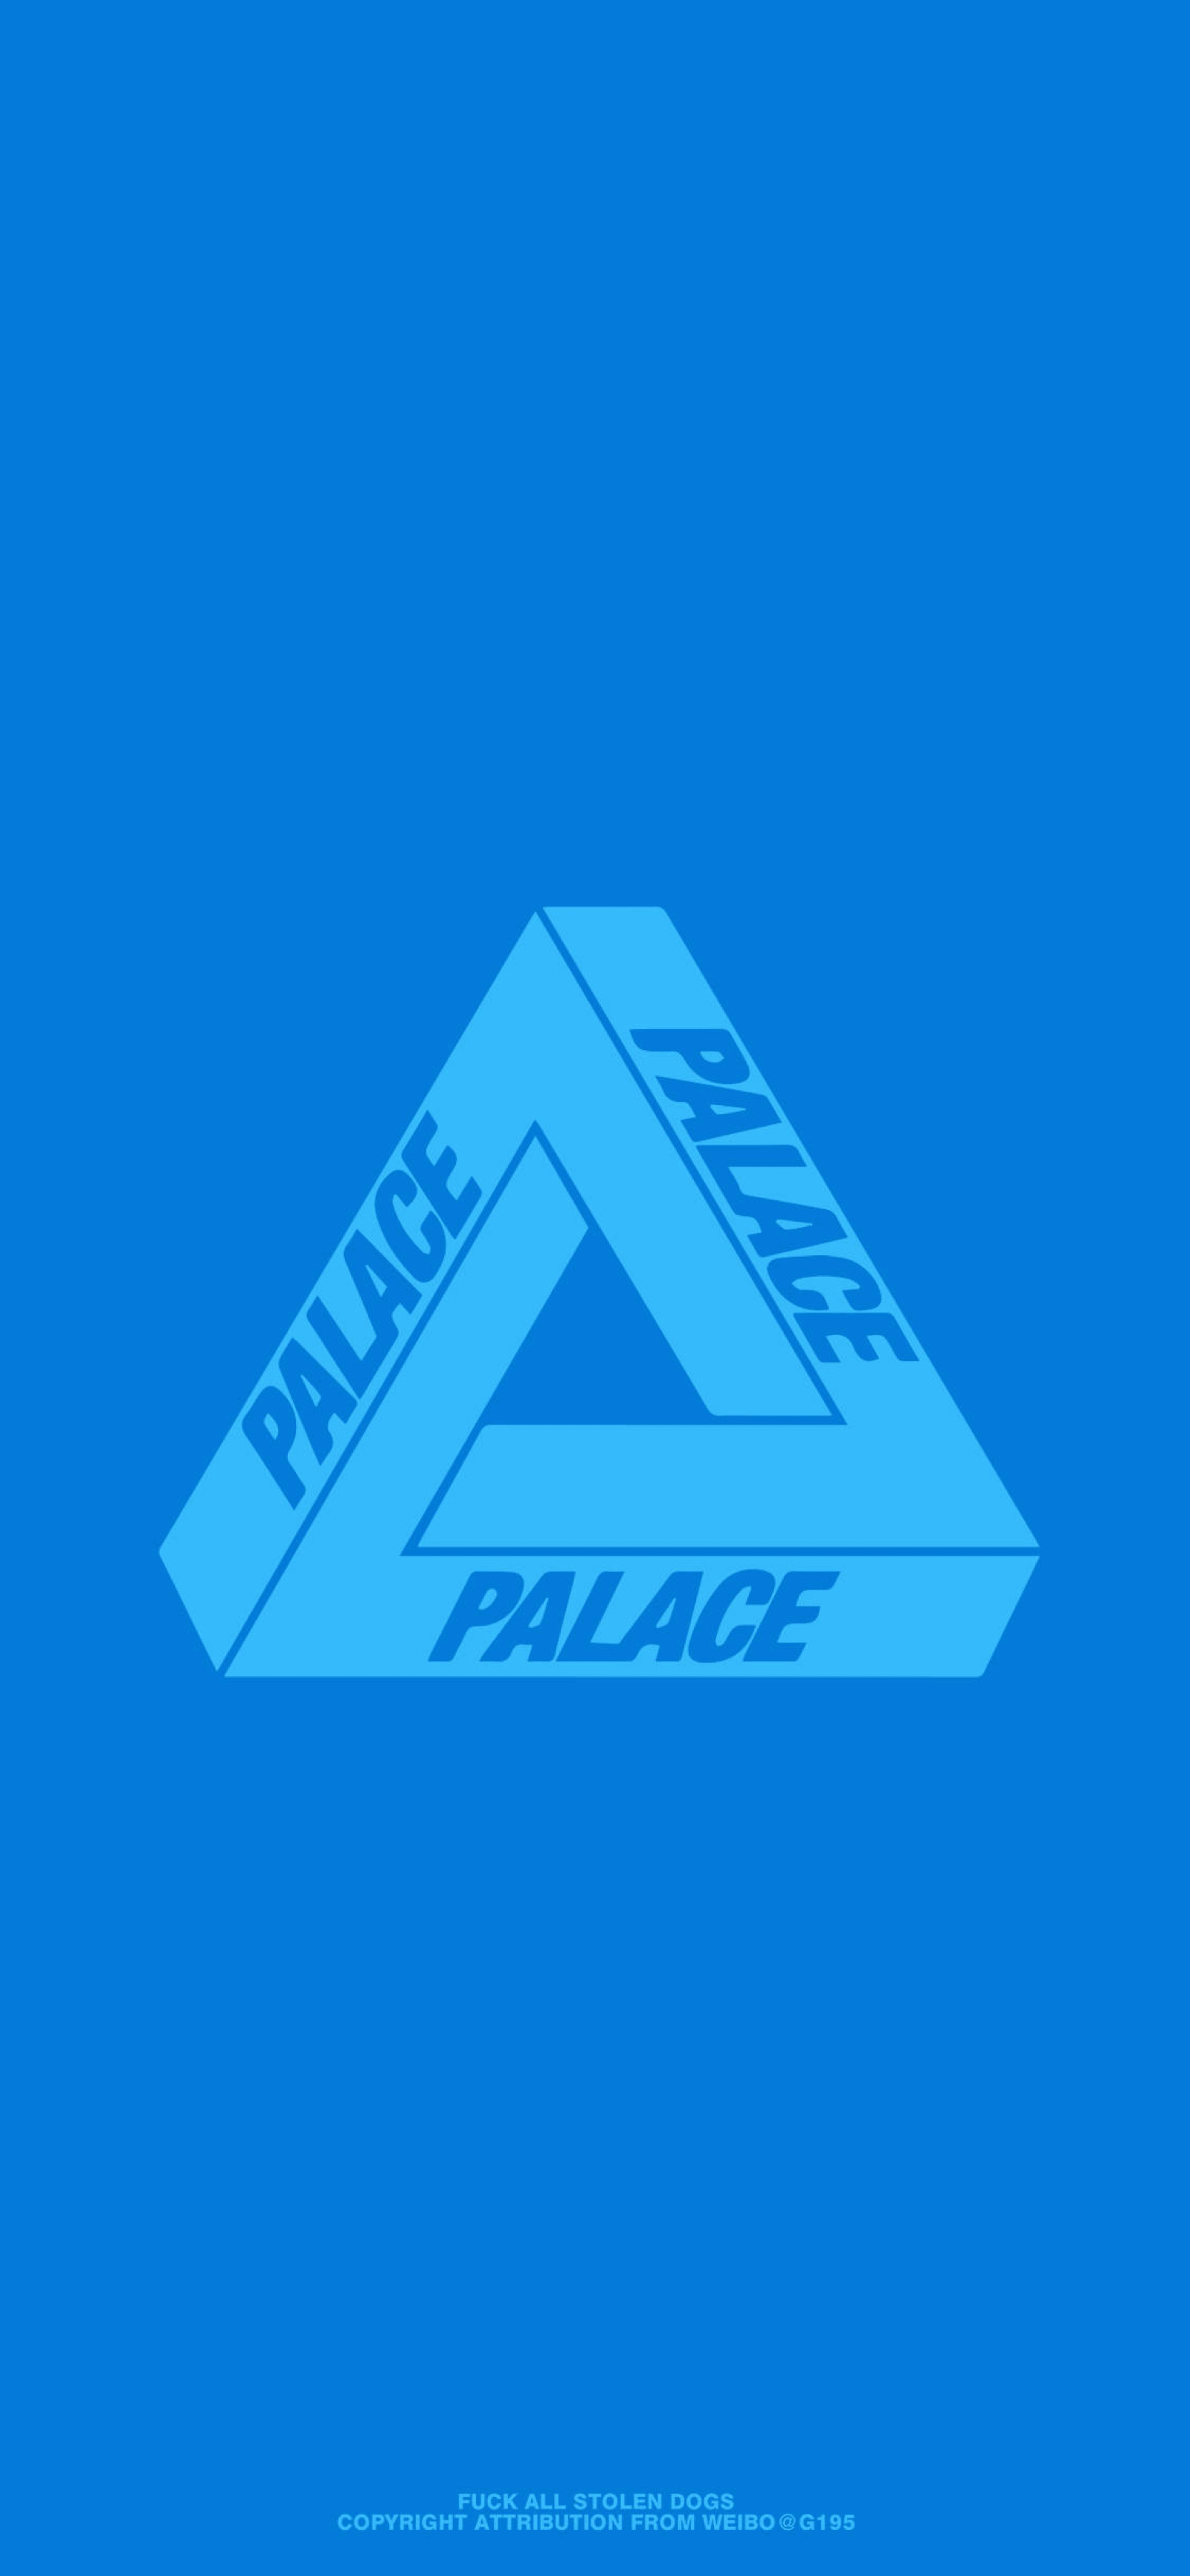 "palace" - 堆糖,美图壁纸兴趣社区